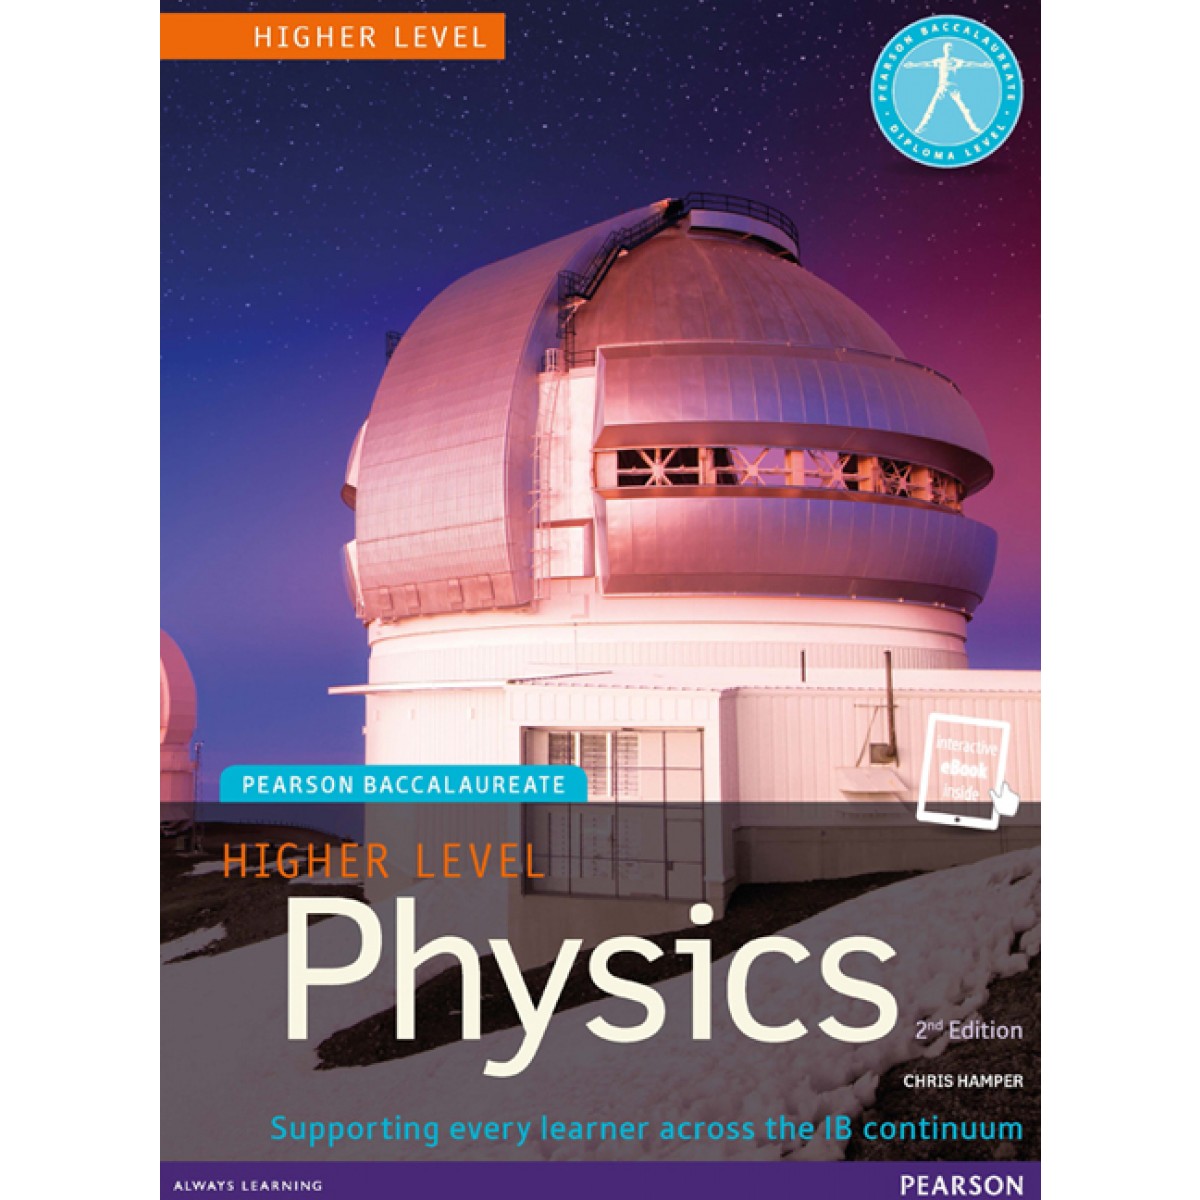 Physics higher Level IB book. High Level physics.